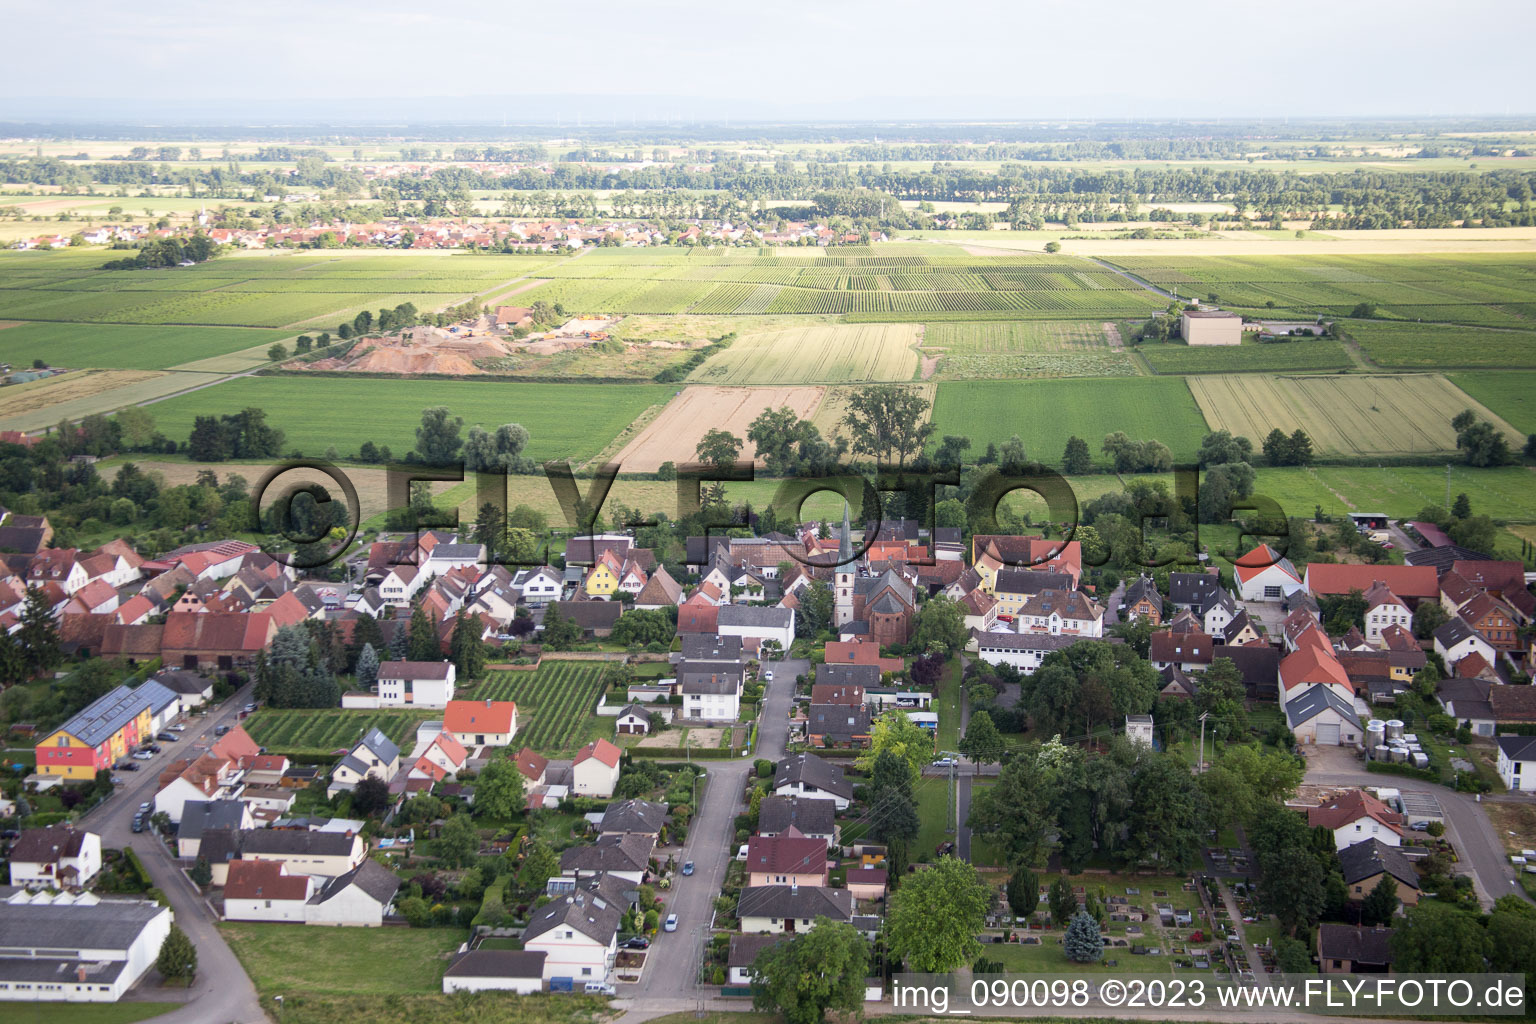 Drone recording of District Duttweiler in Neustadt an der Weinstraße in the state Rhineland-Palatinate, Germany